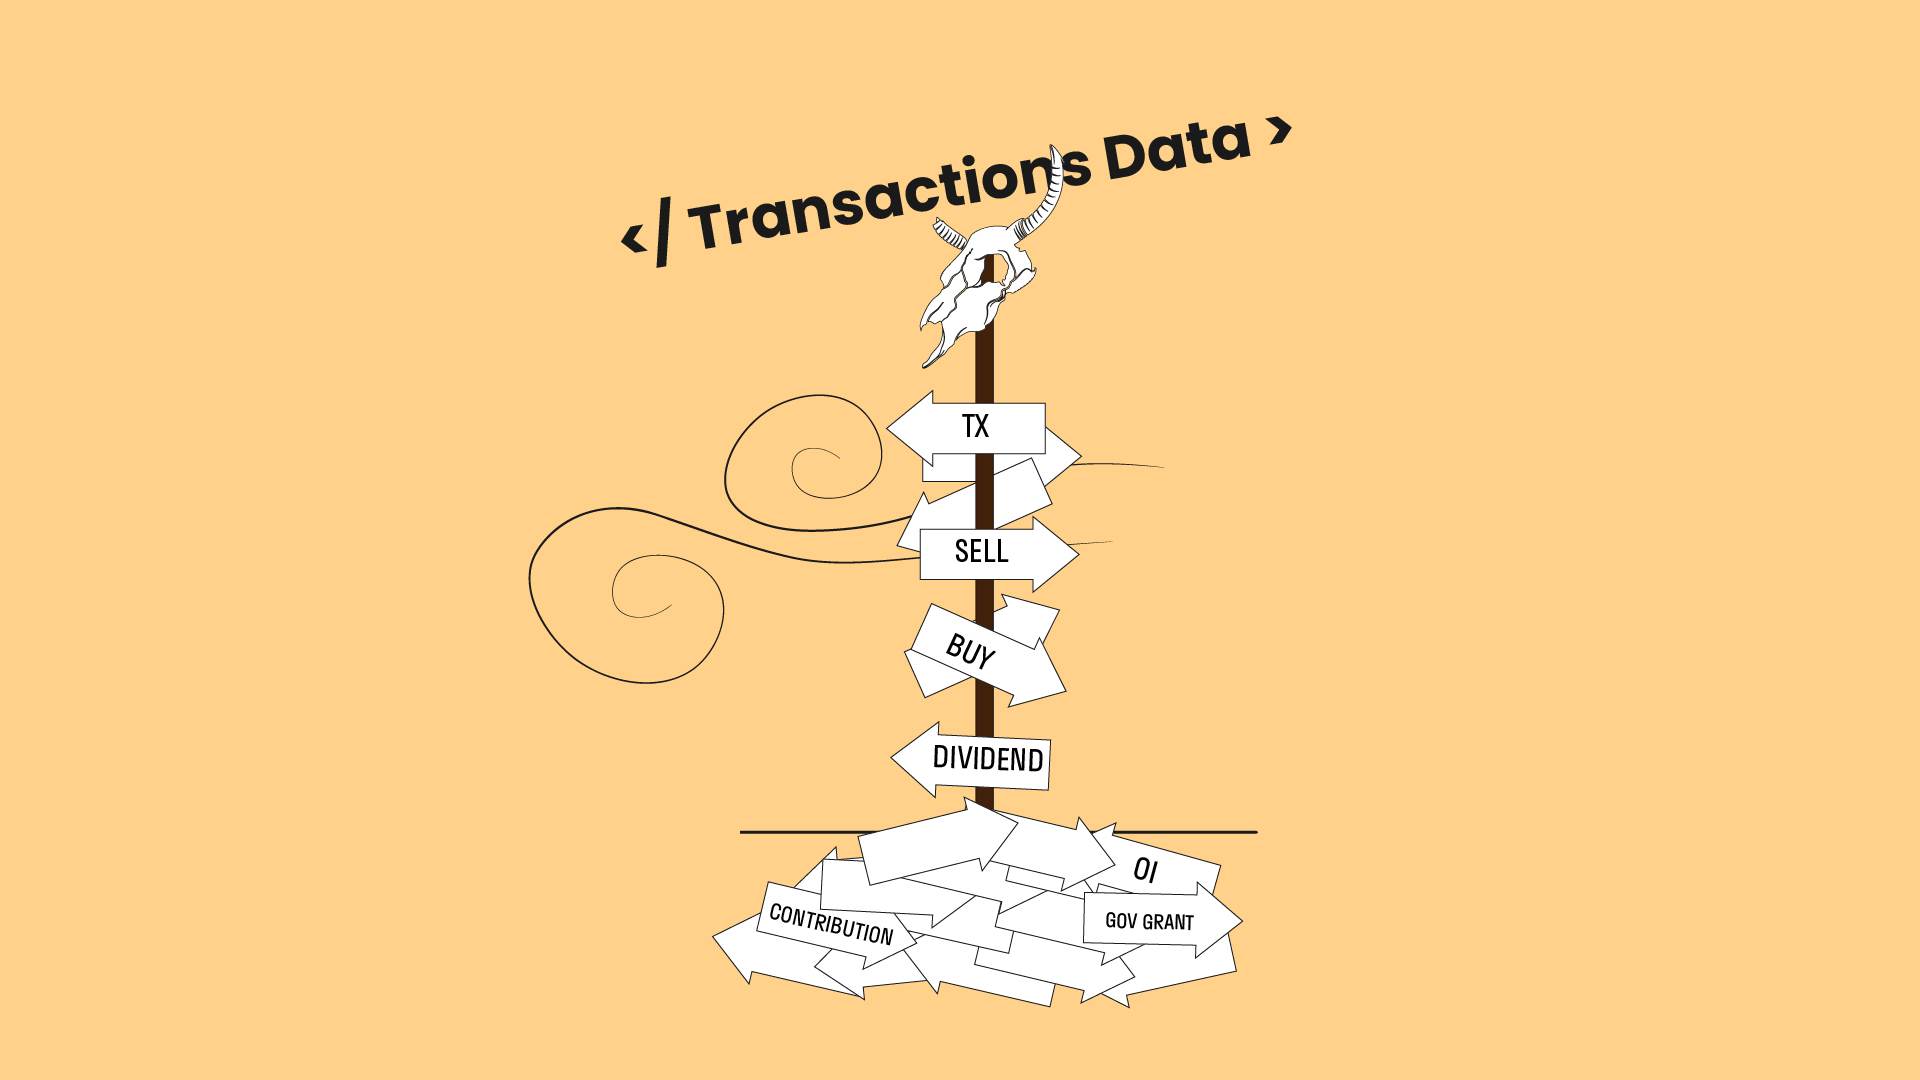 Transaction data types on a broken signpost with skull